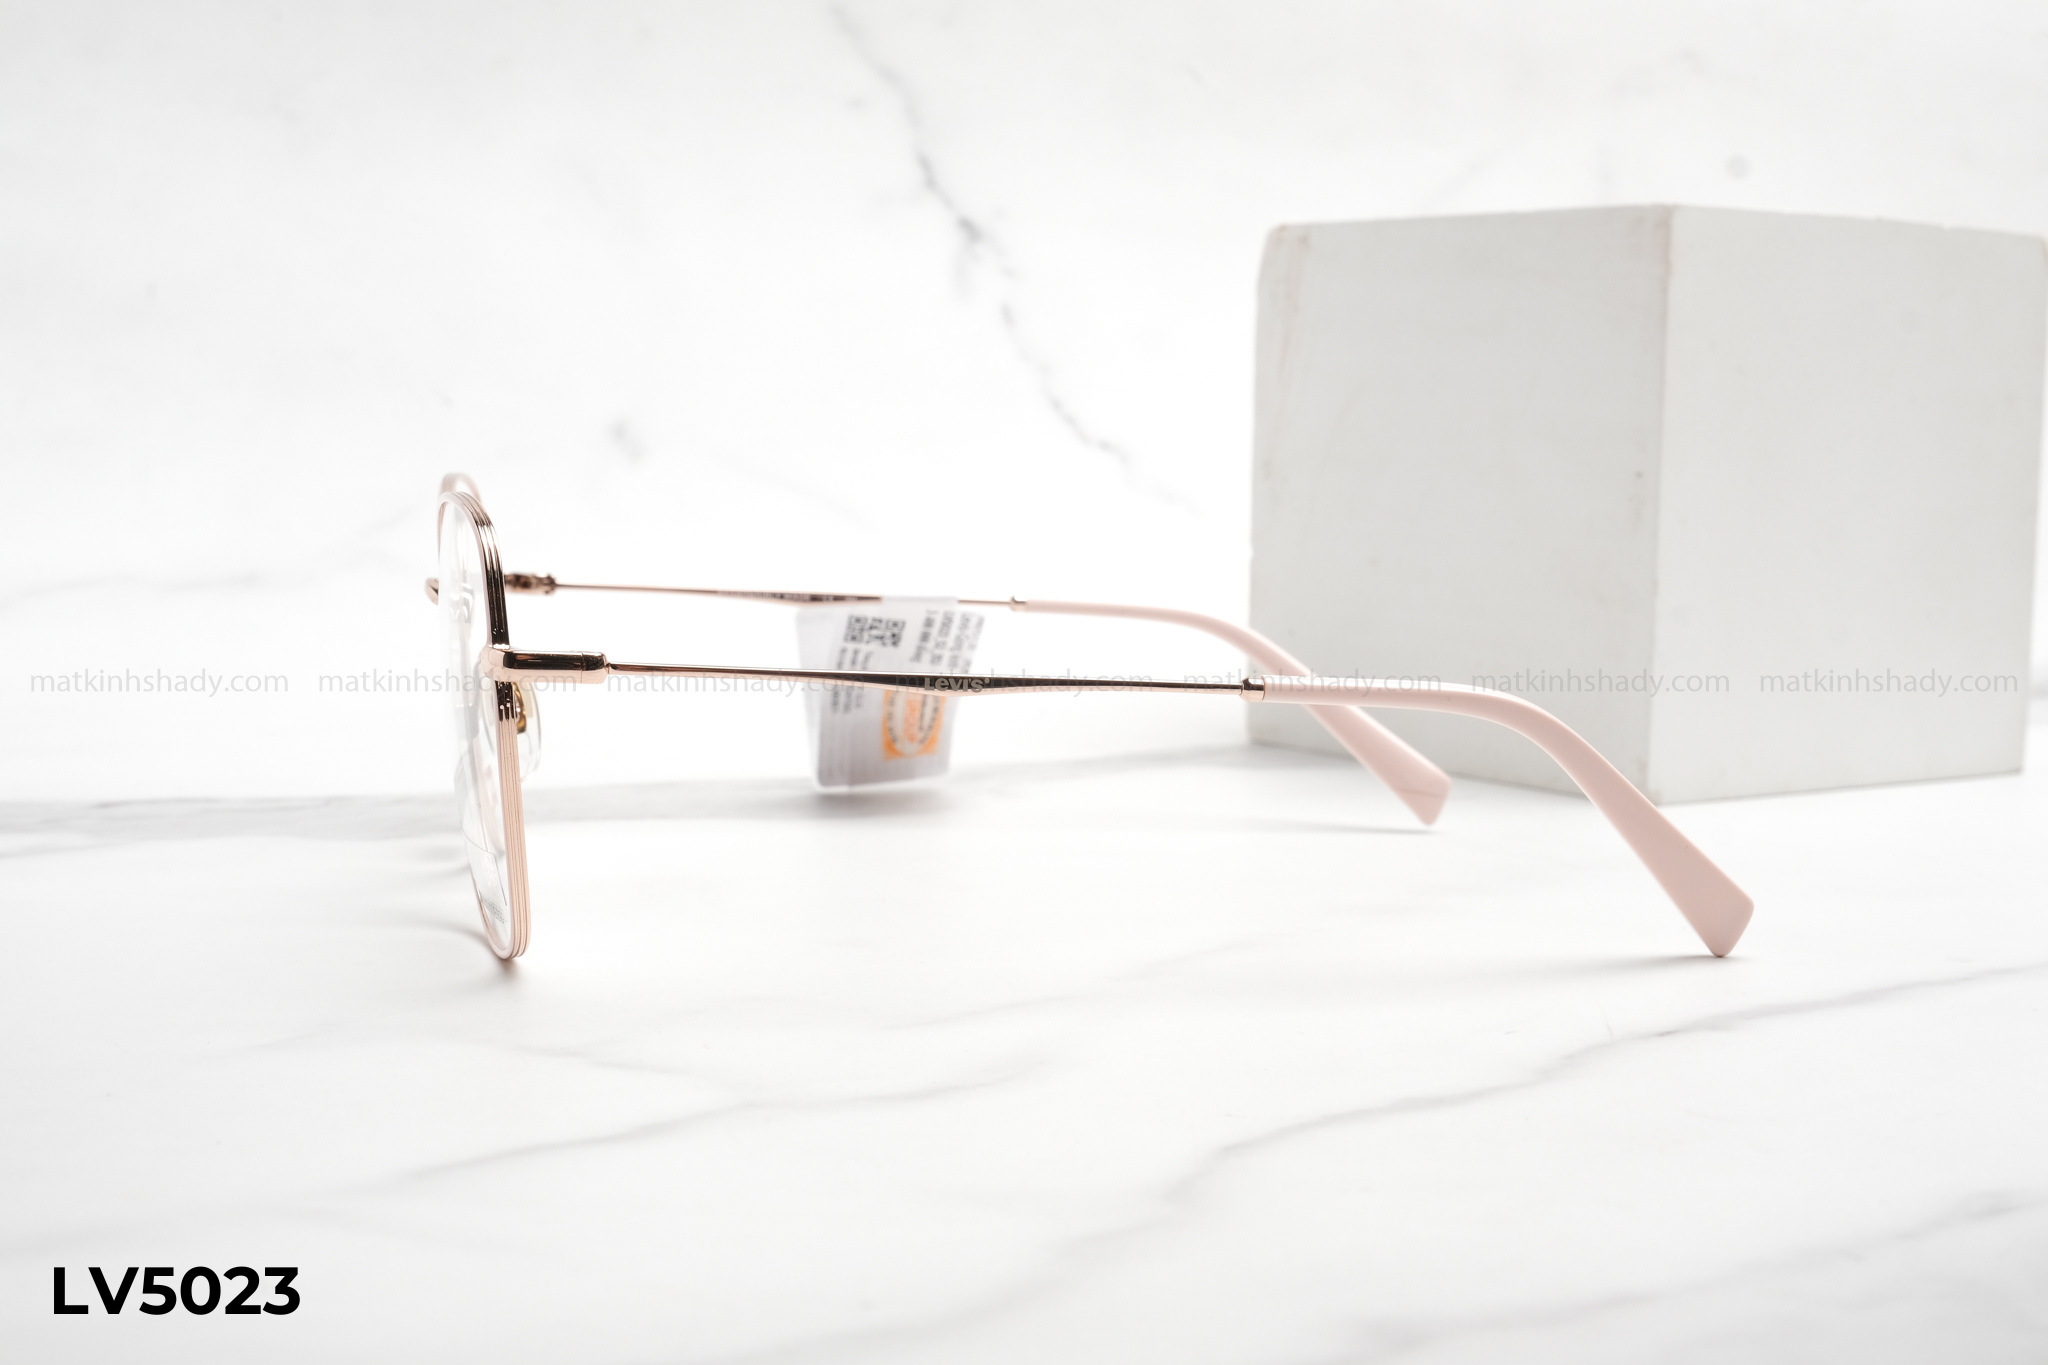  Levi's Eyewear - Glasses - LV5023 